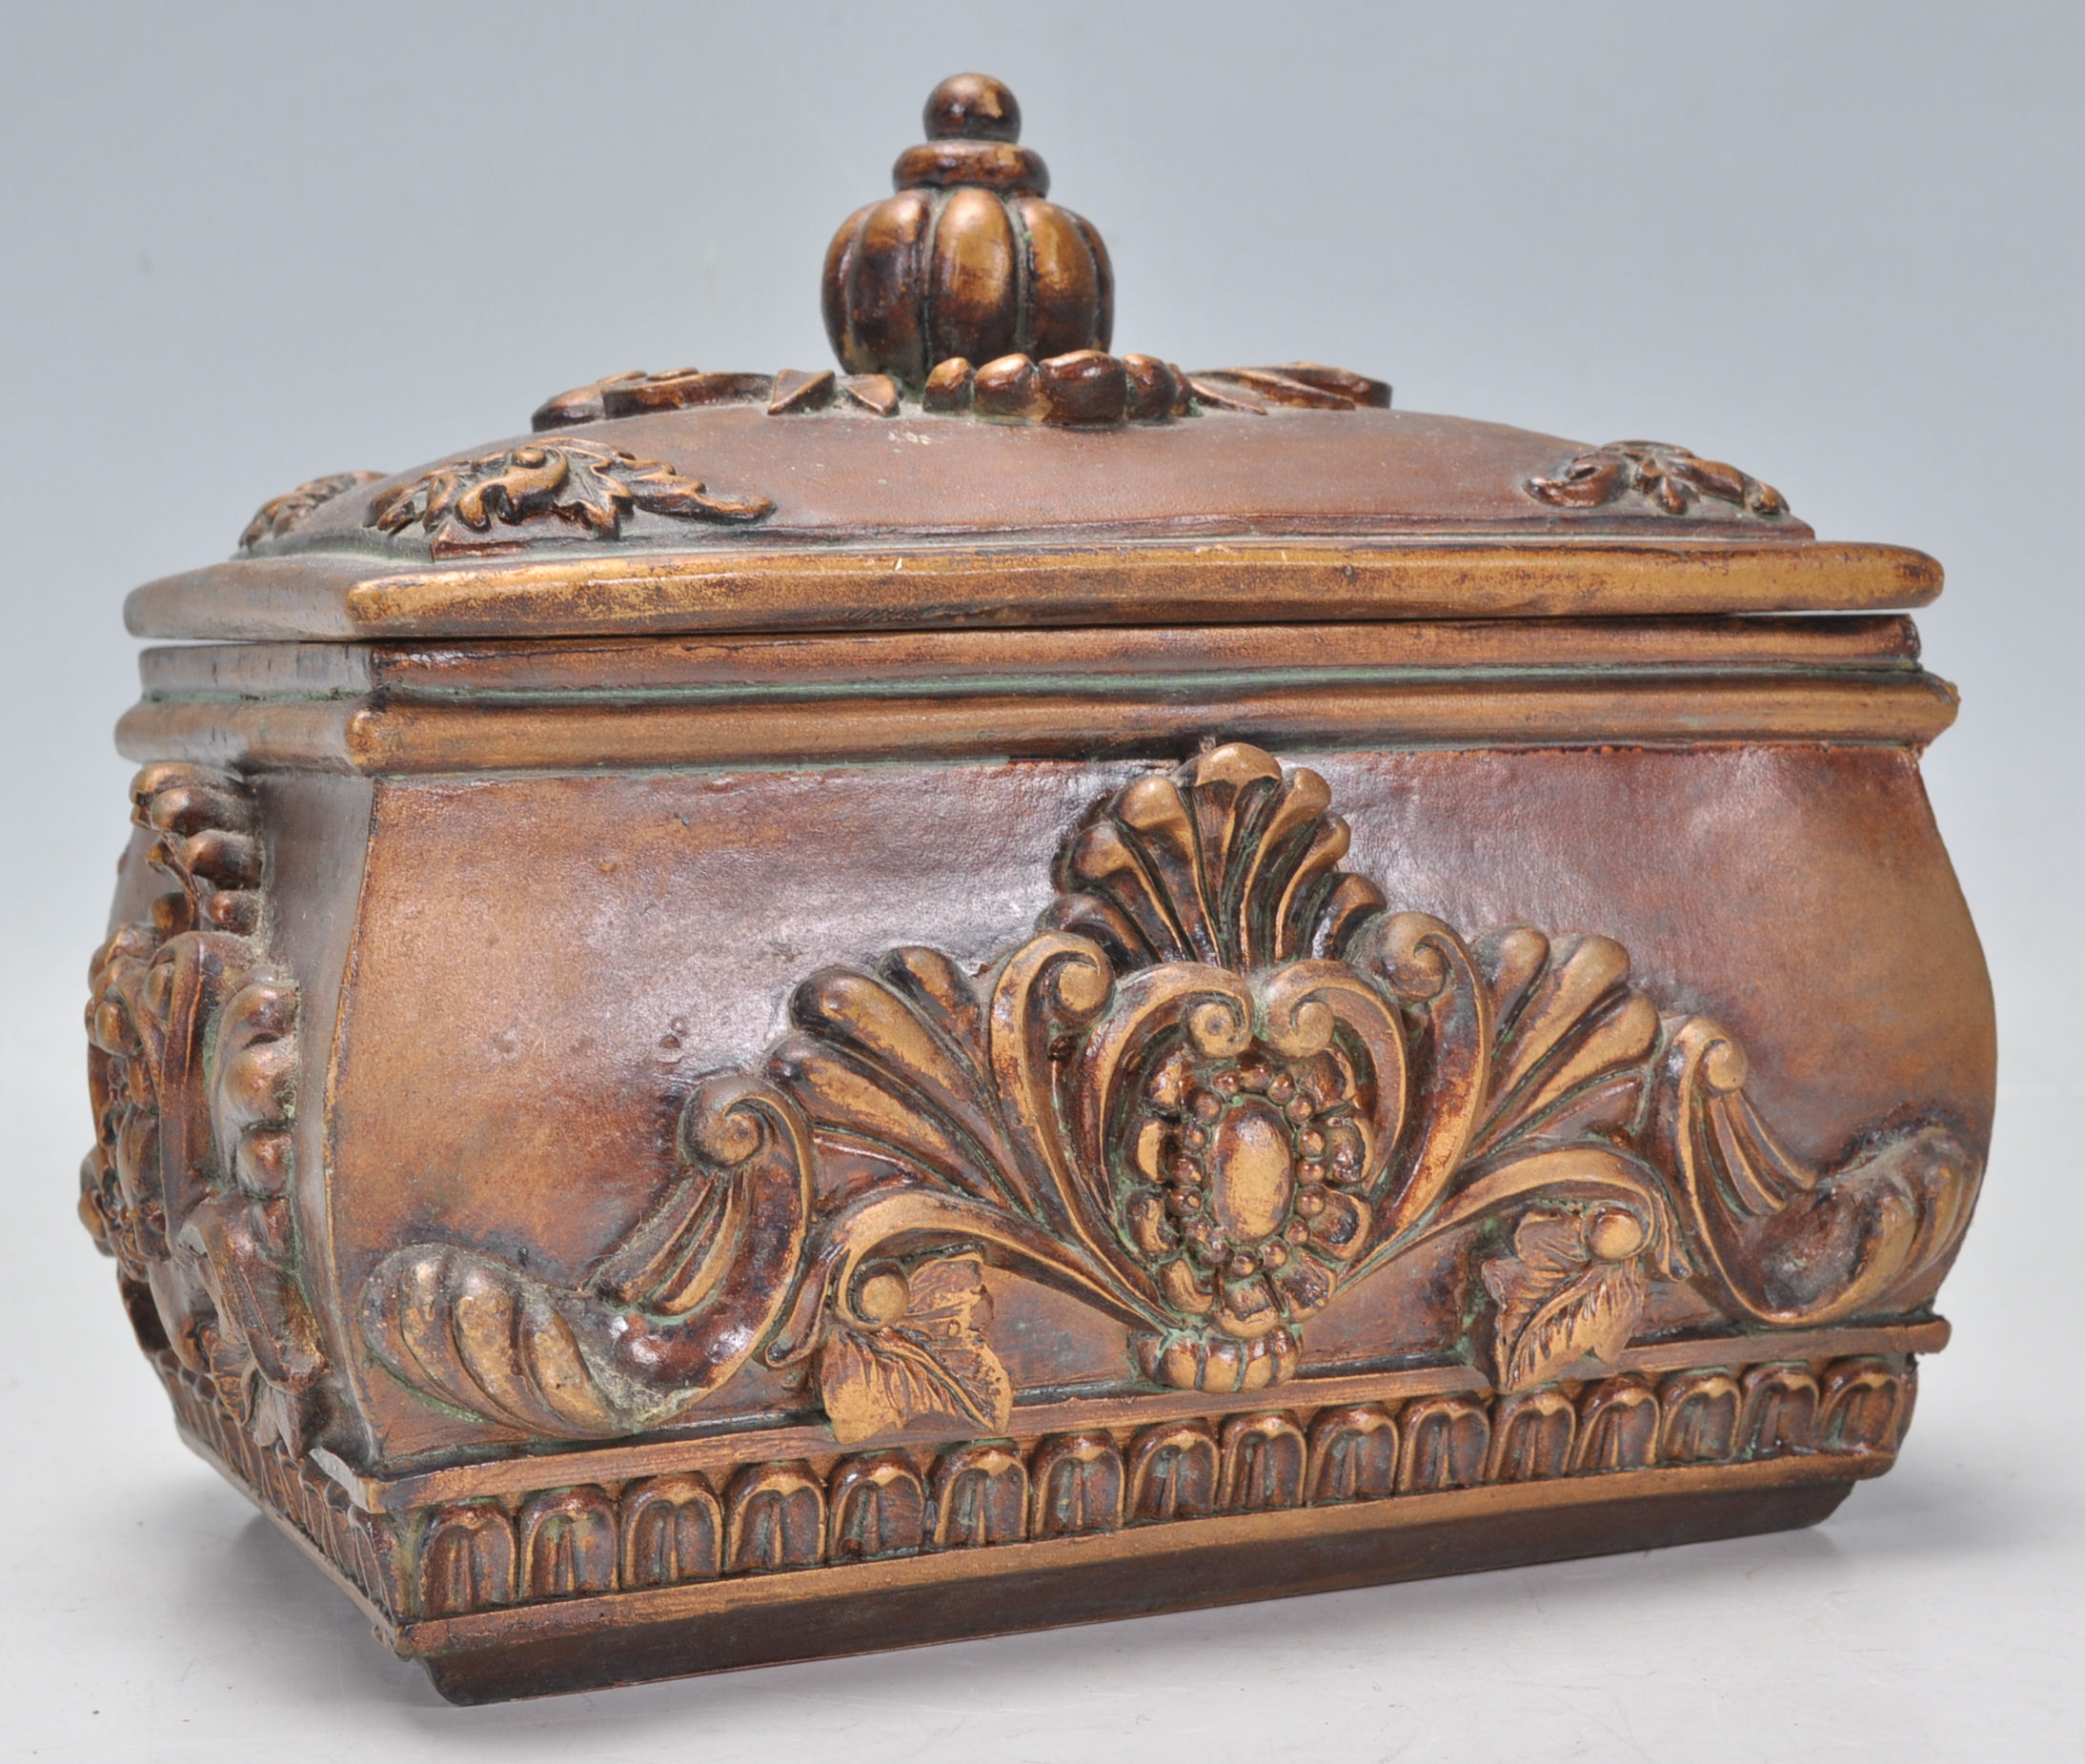 A unusual terracotta jewellery / trinket box havin